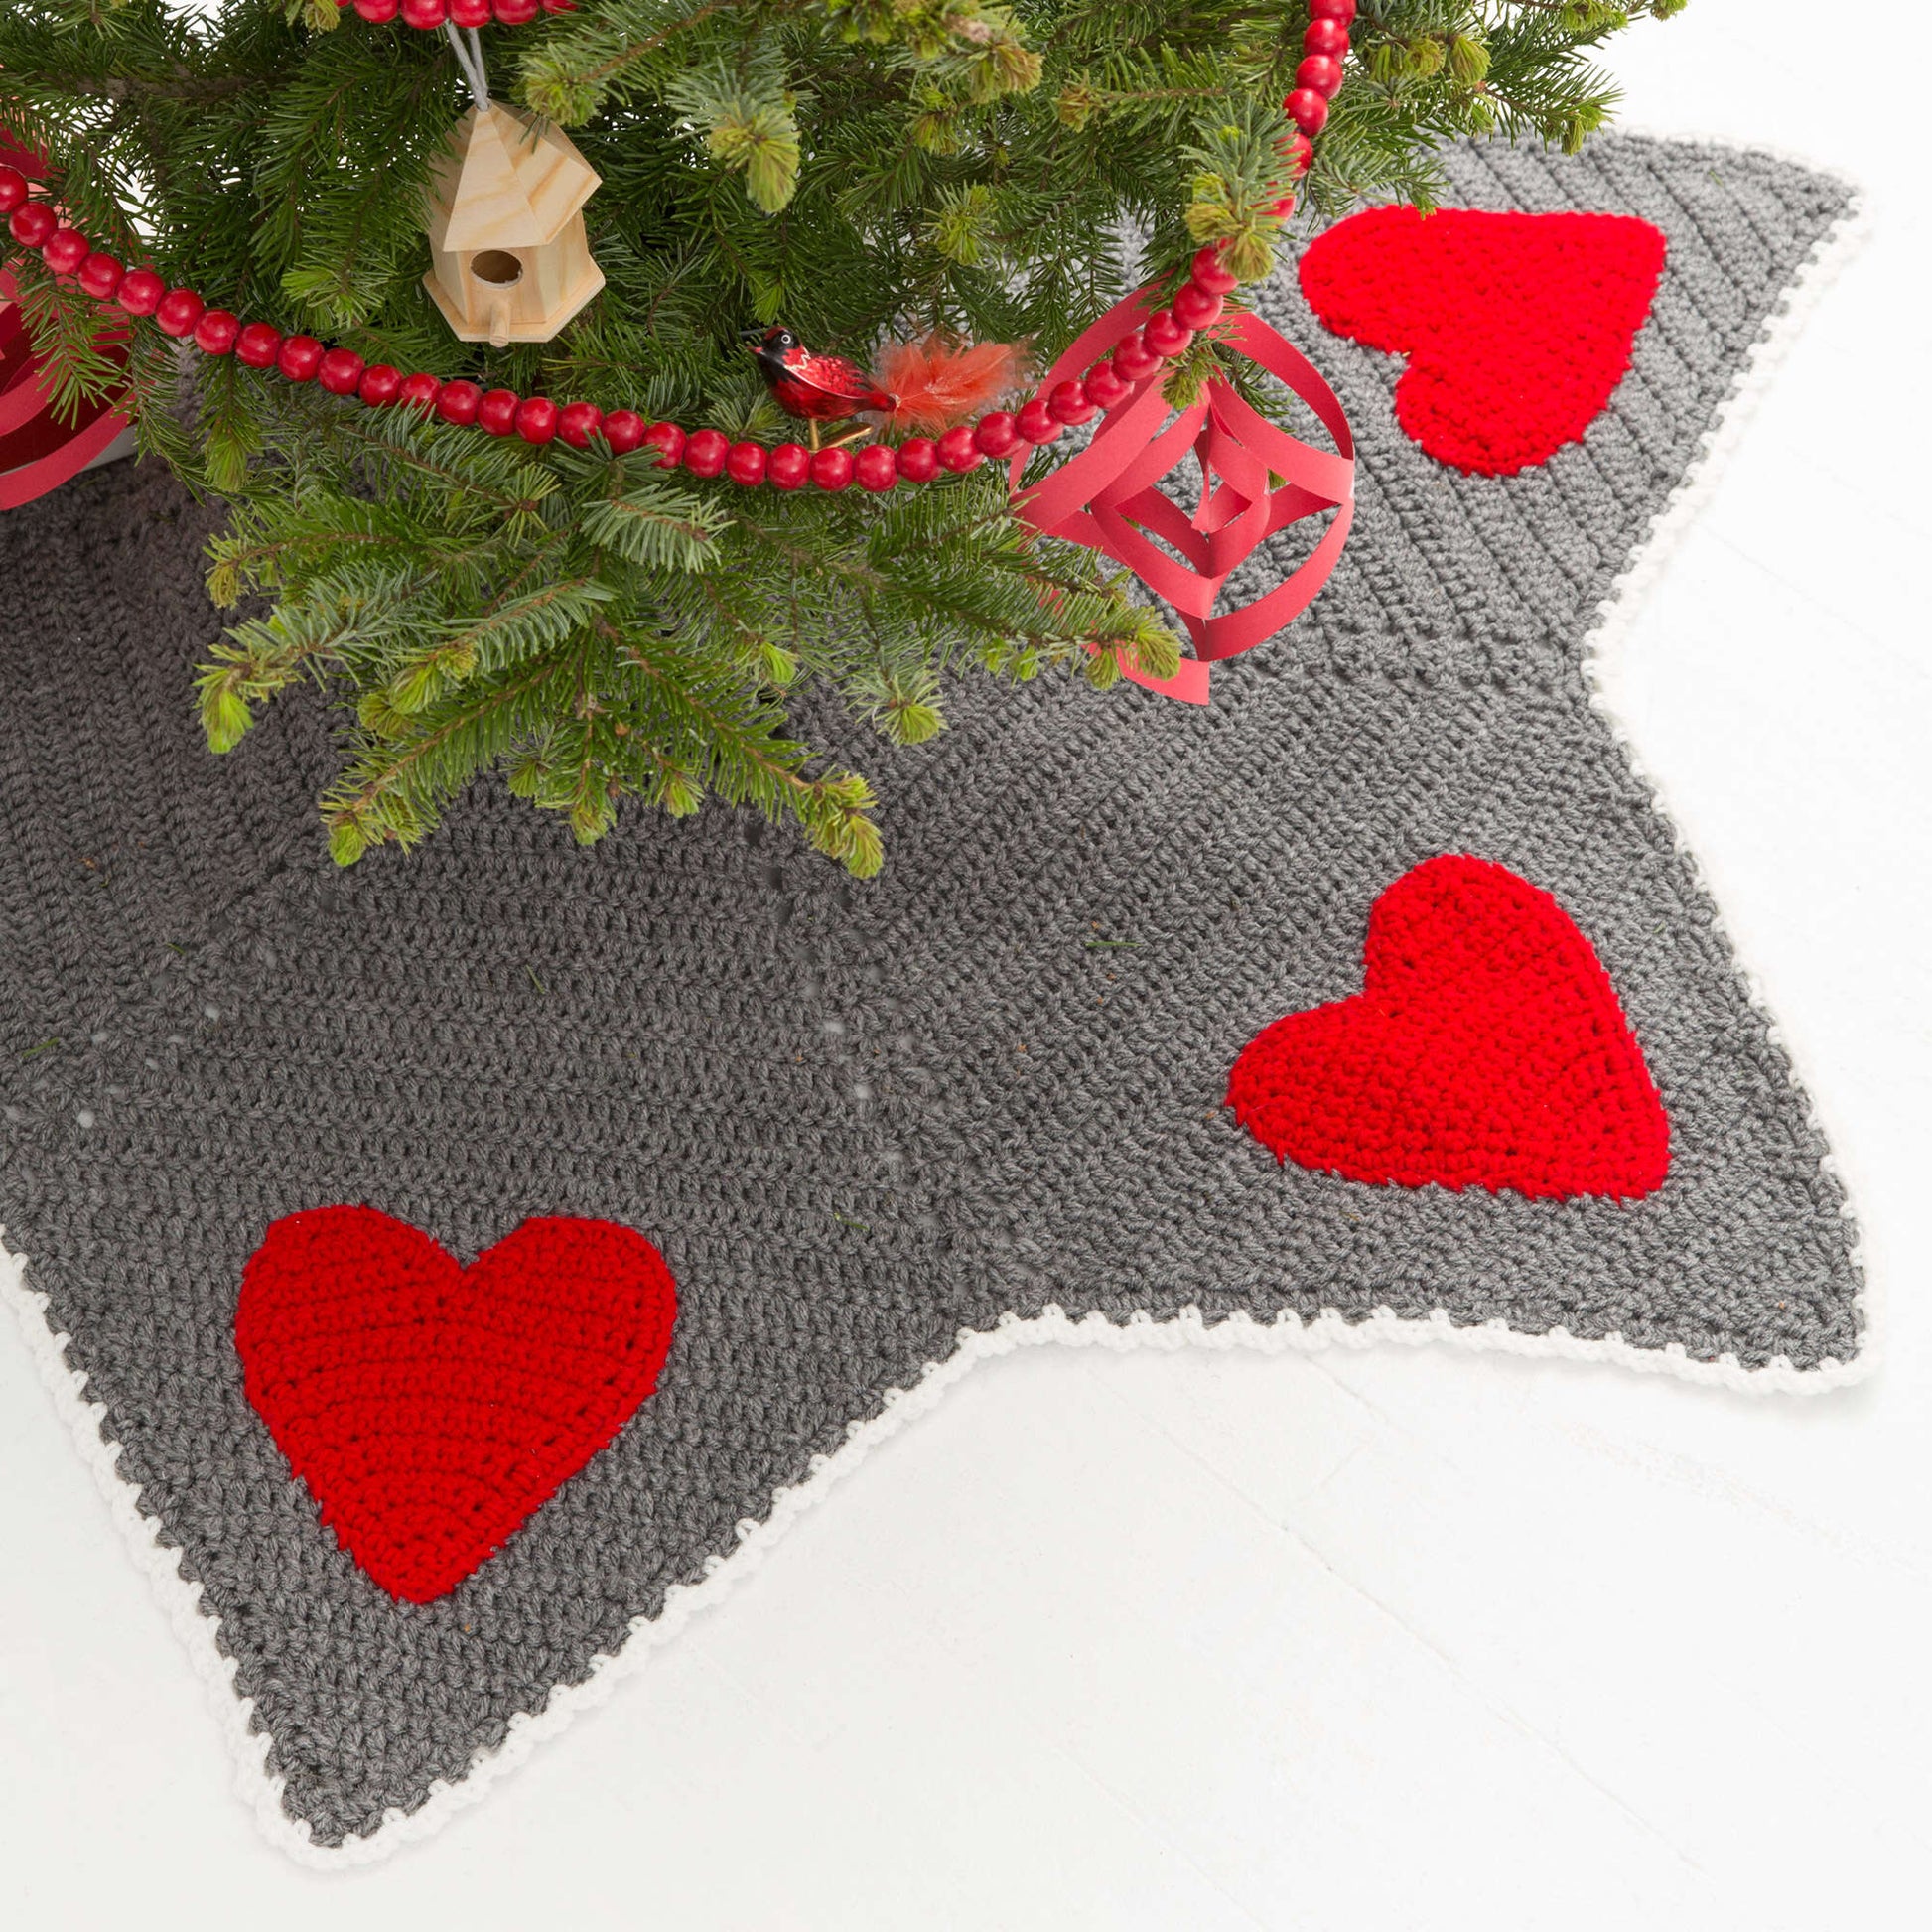 Free Red Heart Holiday Hearts Tree Skirt Crochet Pattern